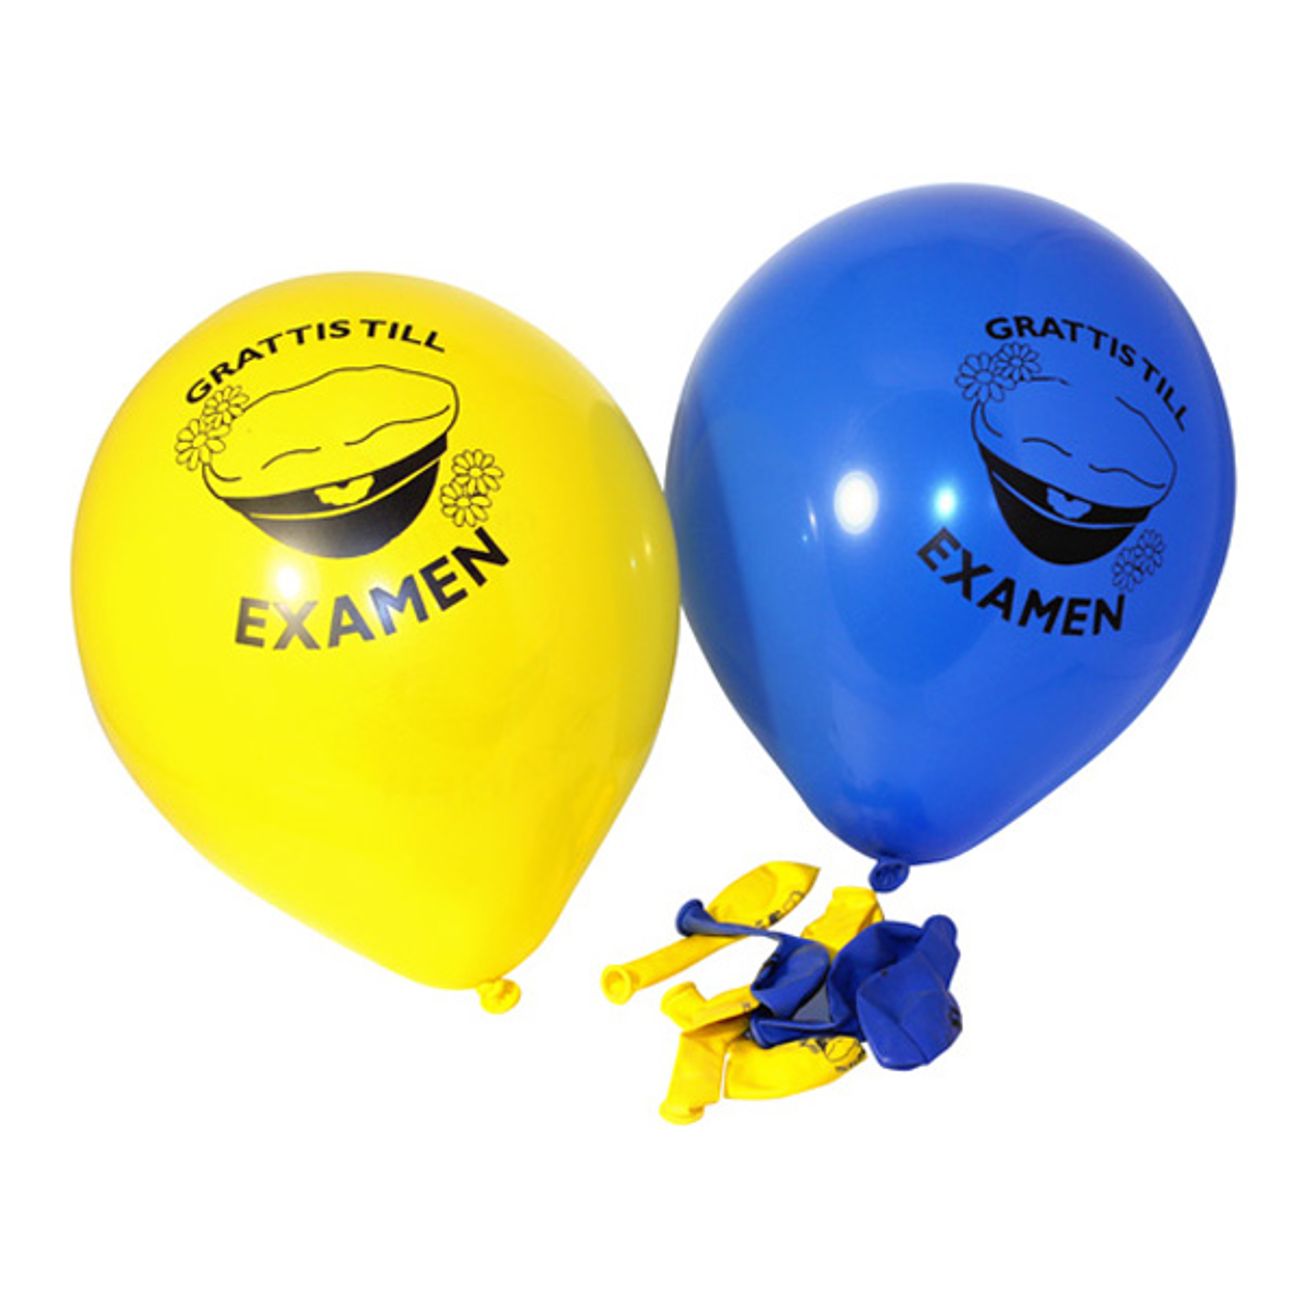 grattis-till-examen-ballonger-1